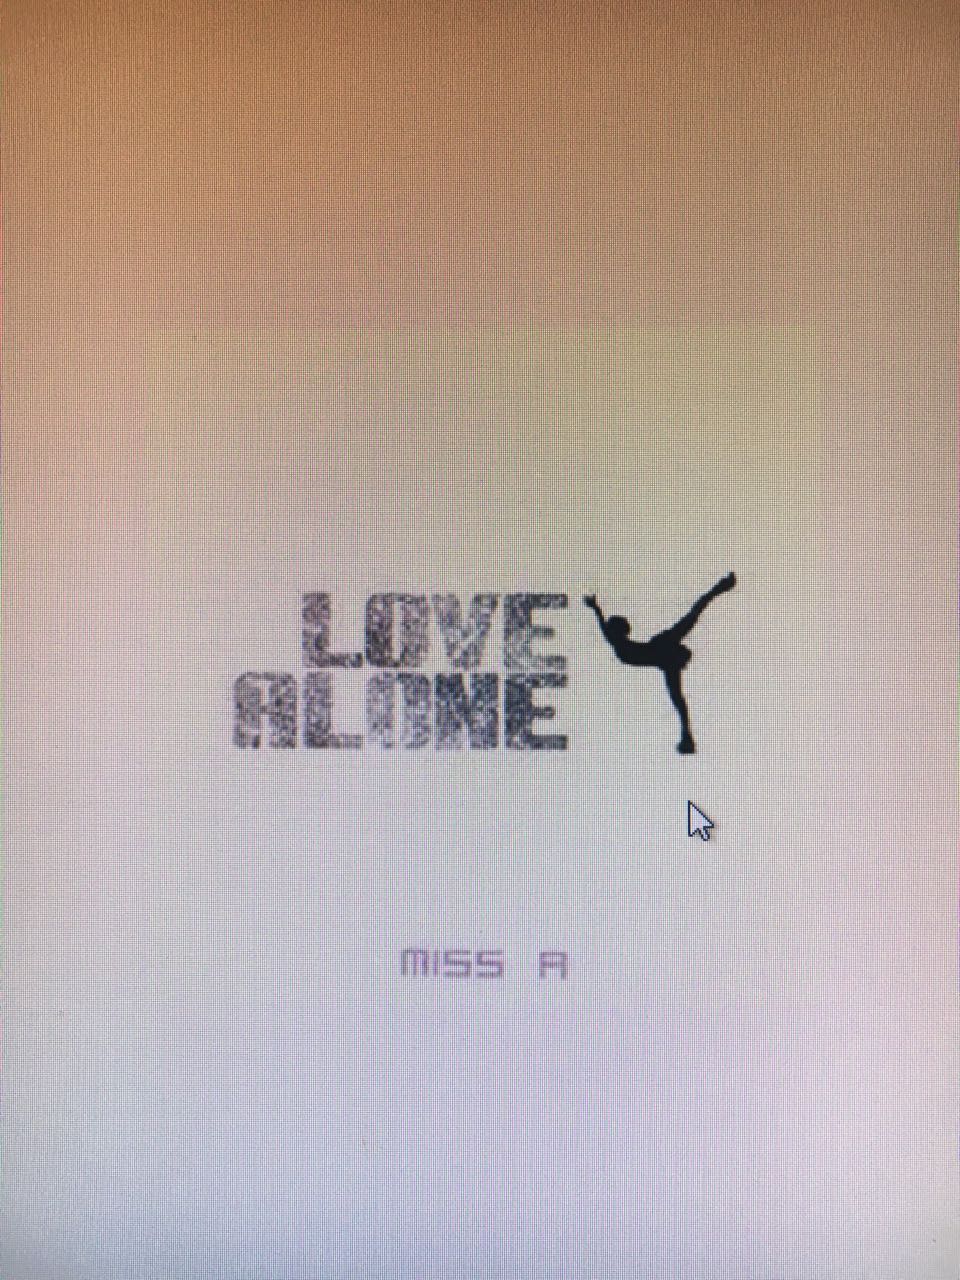 Love Alone